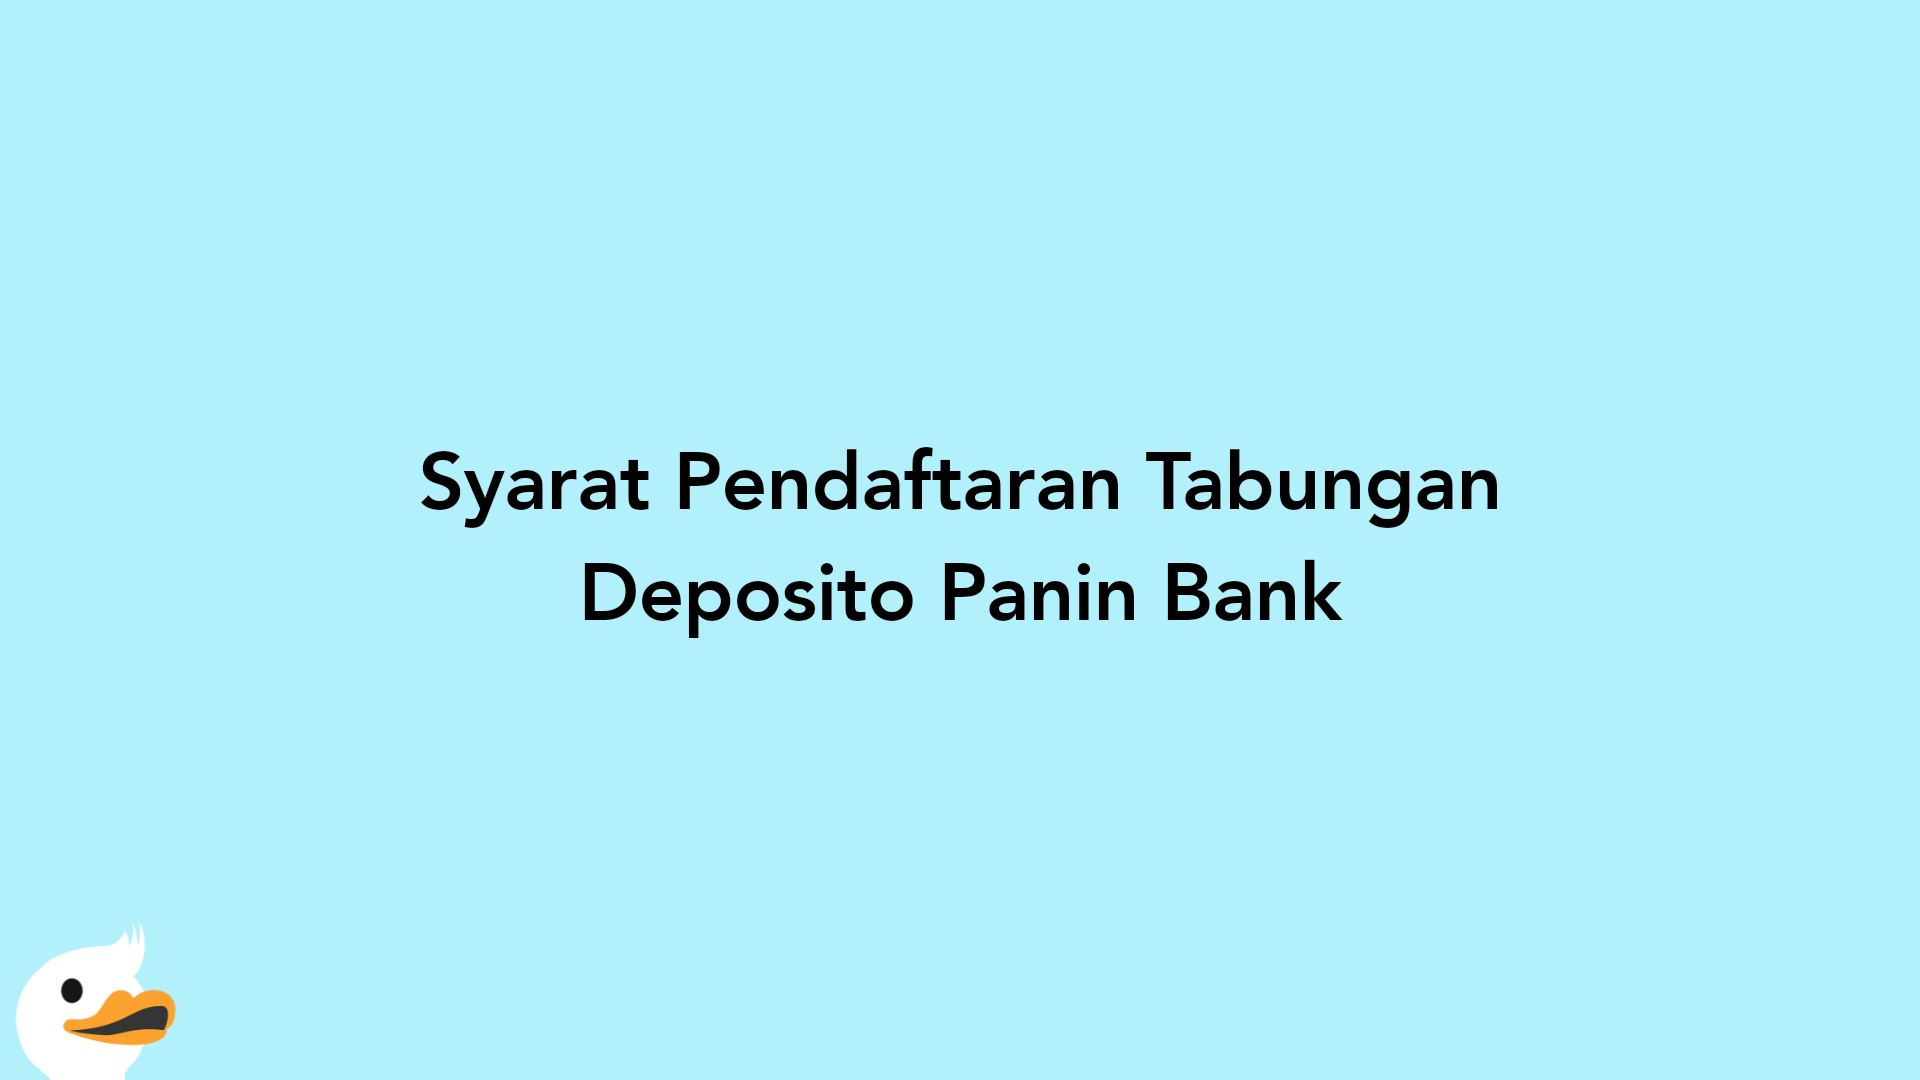 Syarat Pendaftaran Tabungan Deposito Panin Bank